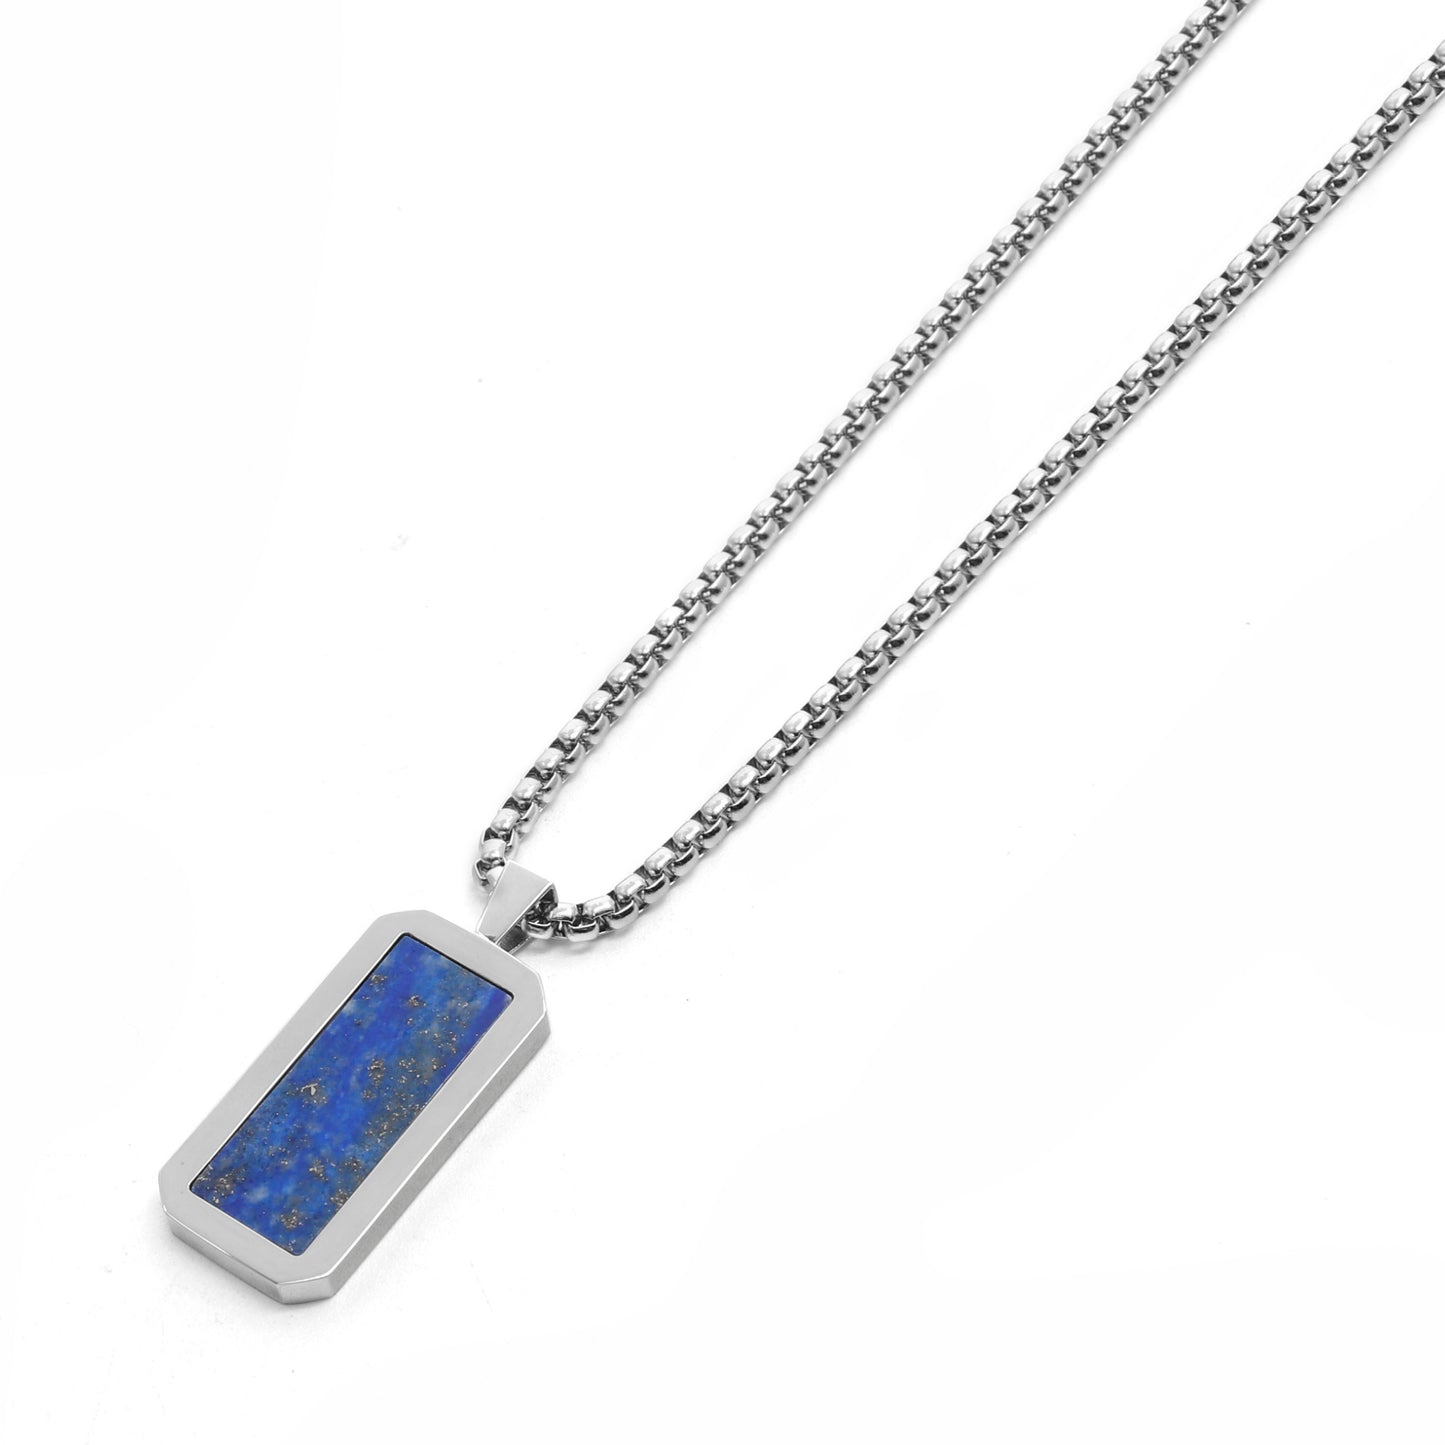 Necklaces - Silver Necklace With Rectangle Lapis Lazuli Pendant